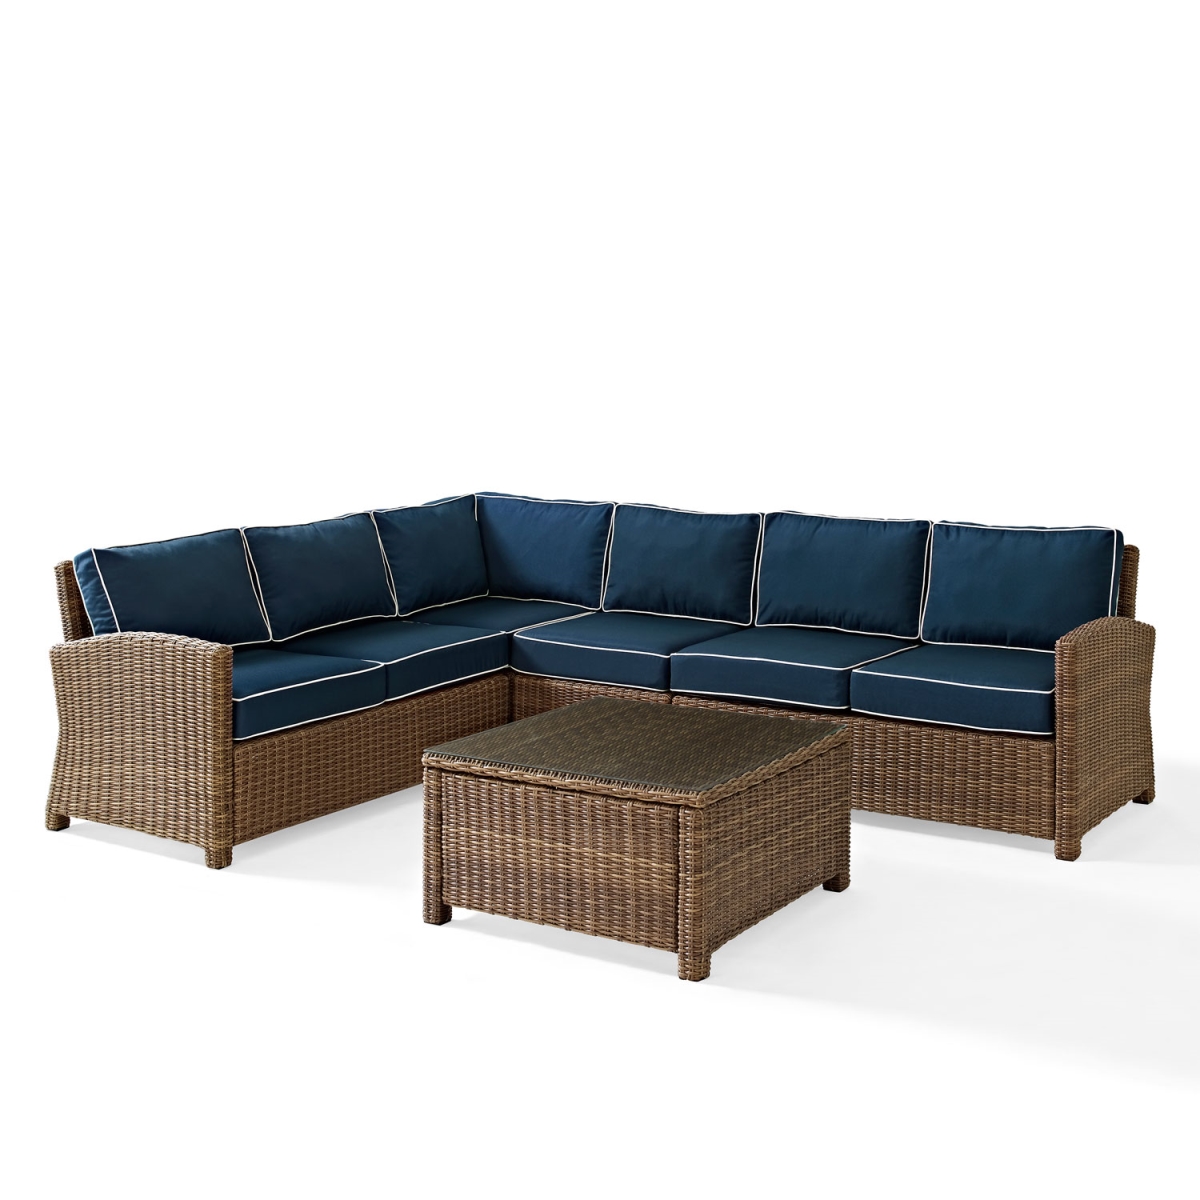 Ko70159-nv 5 Piece Bradenton Outdoor Wicker Seating Set With Navy Cushions - Weathered Brown